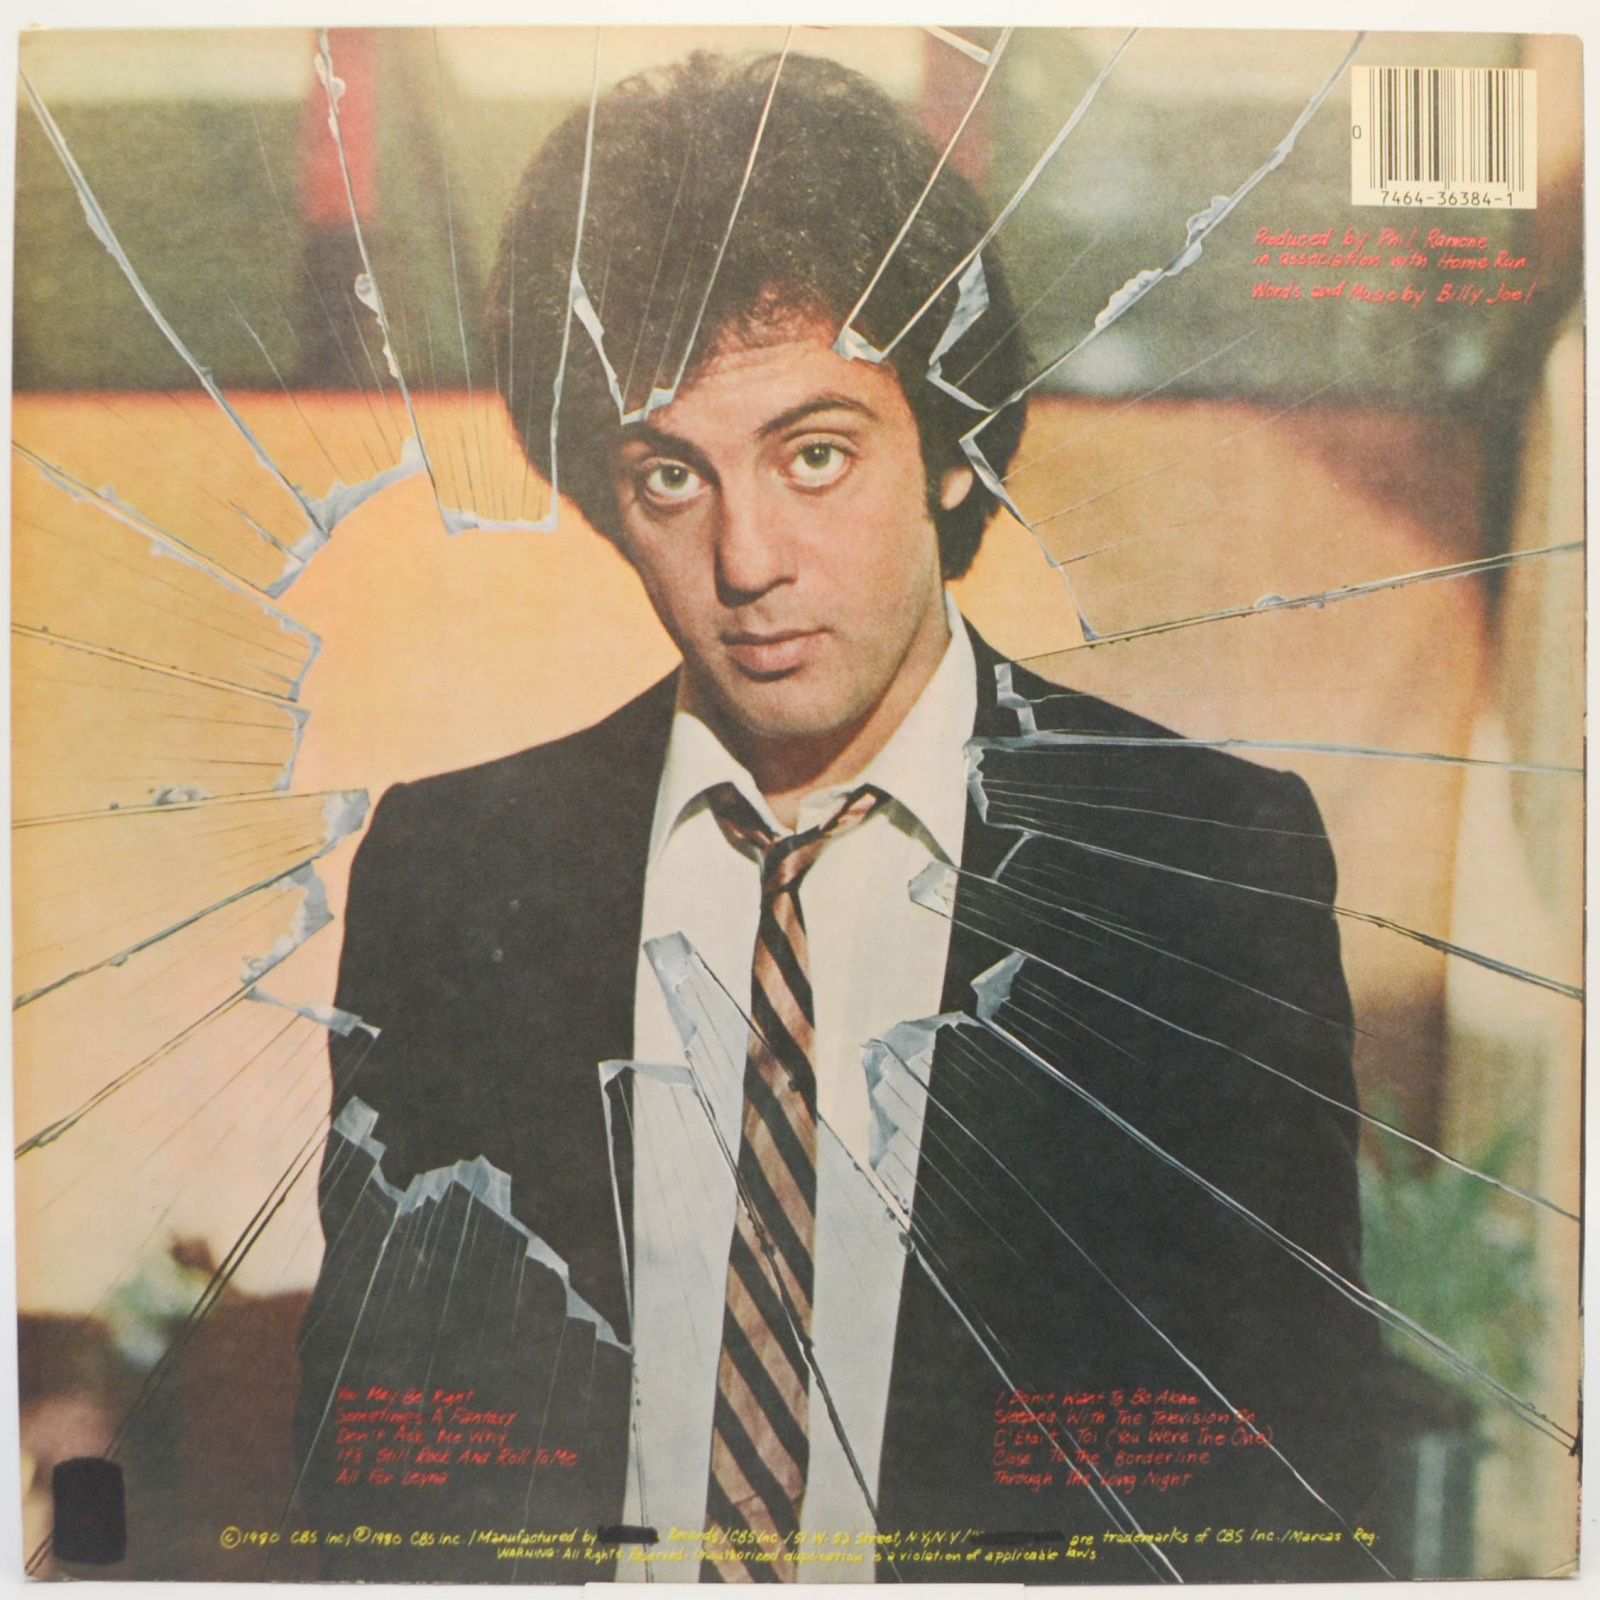 Billy Joel — Glass Houses (USA), 1980